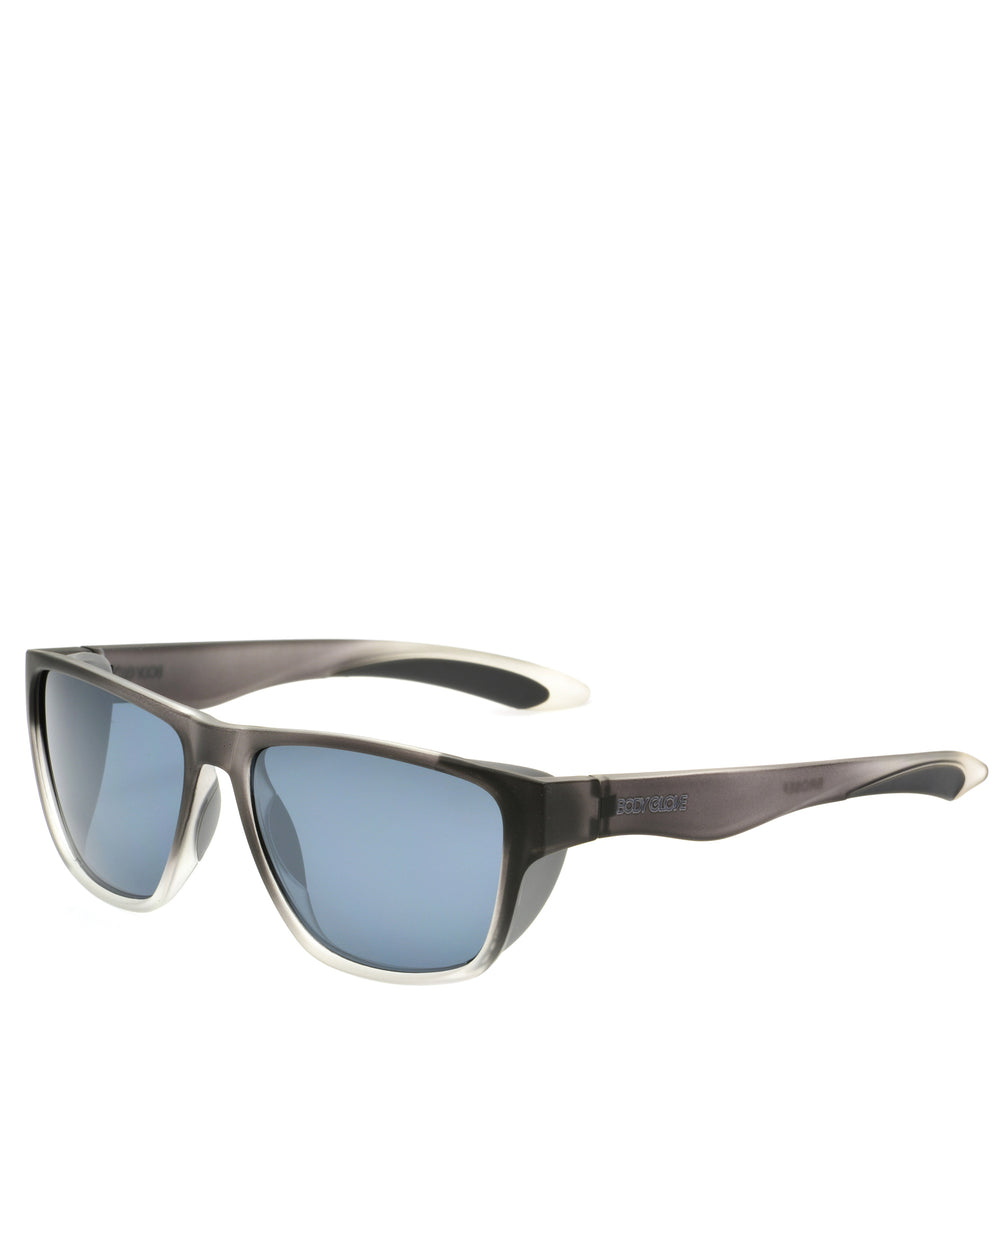 Men's Brosef Polarized Sunglasses - Dark Gun